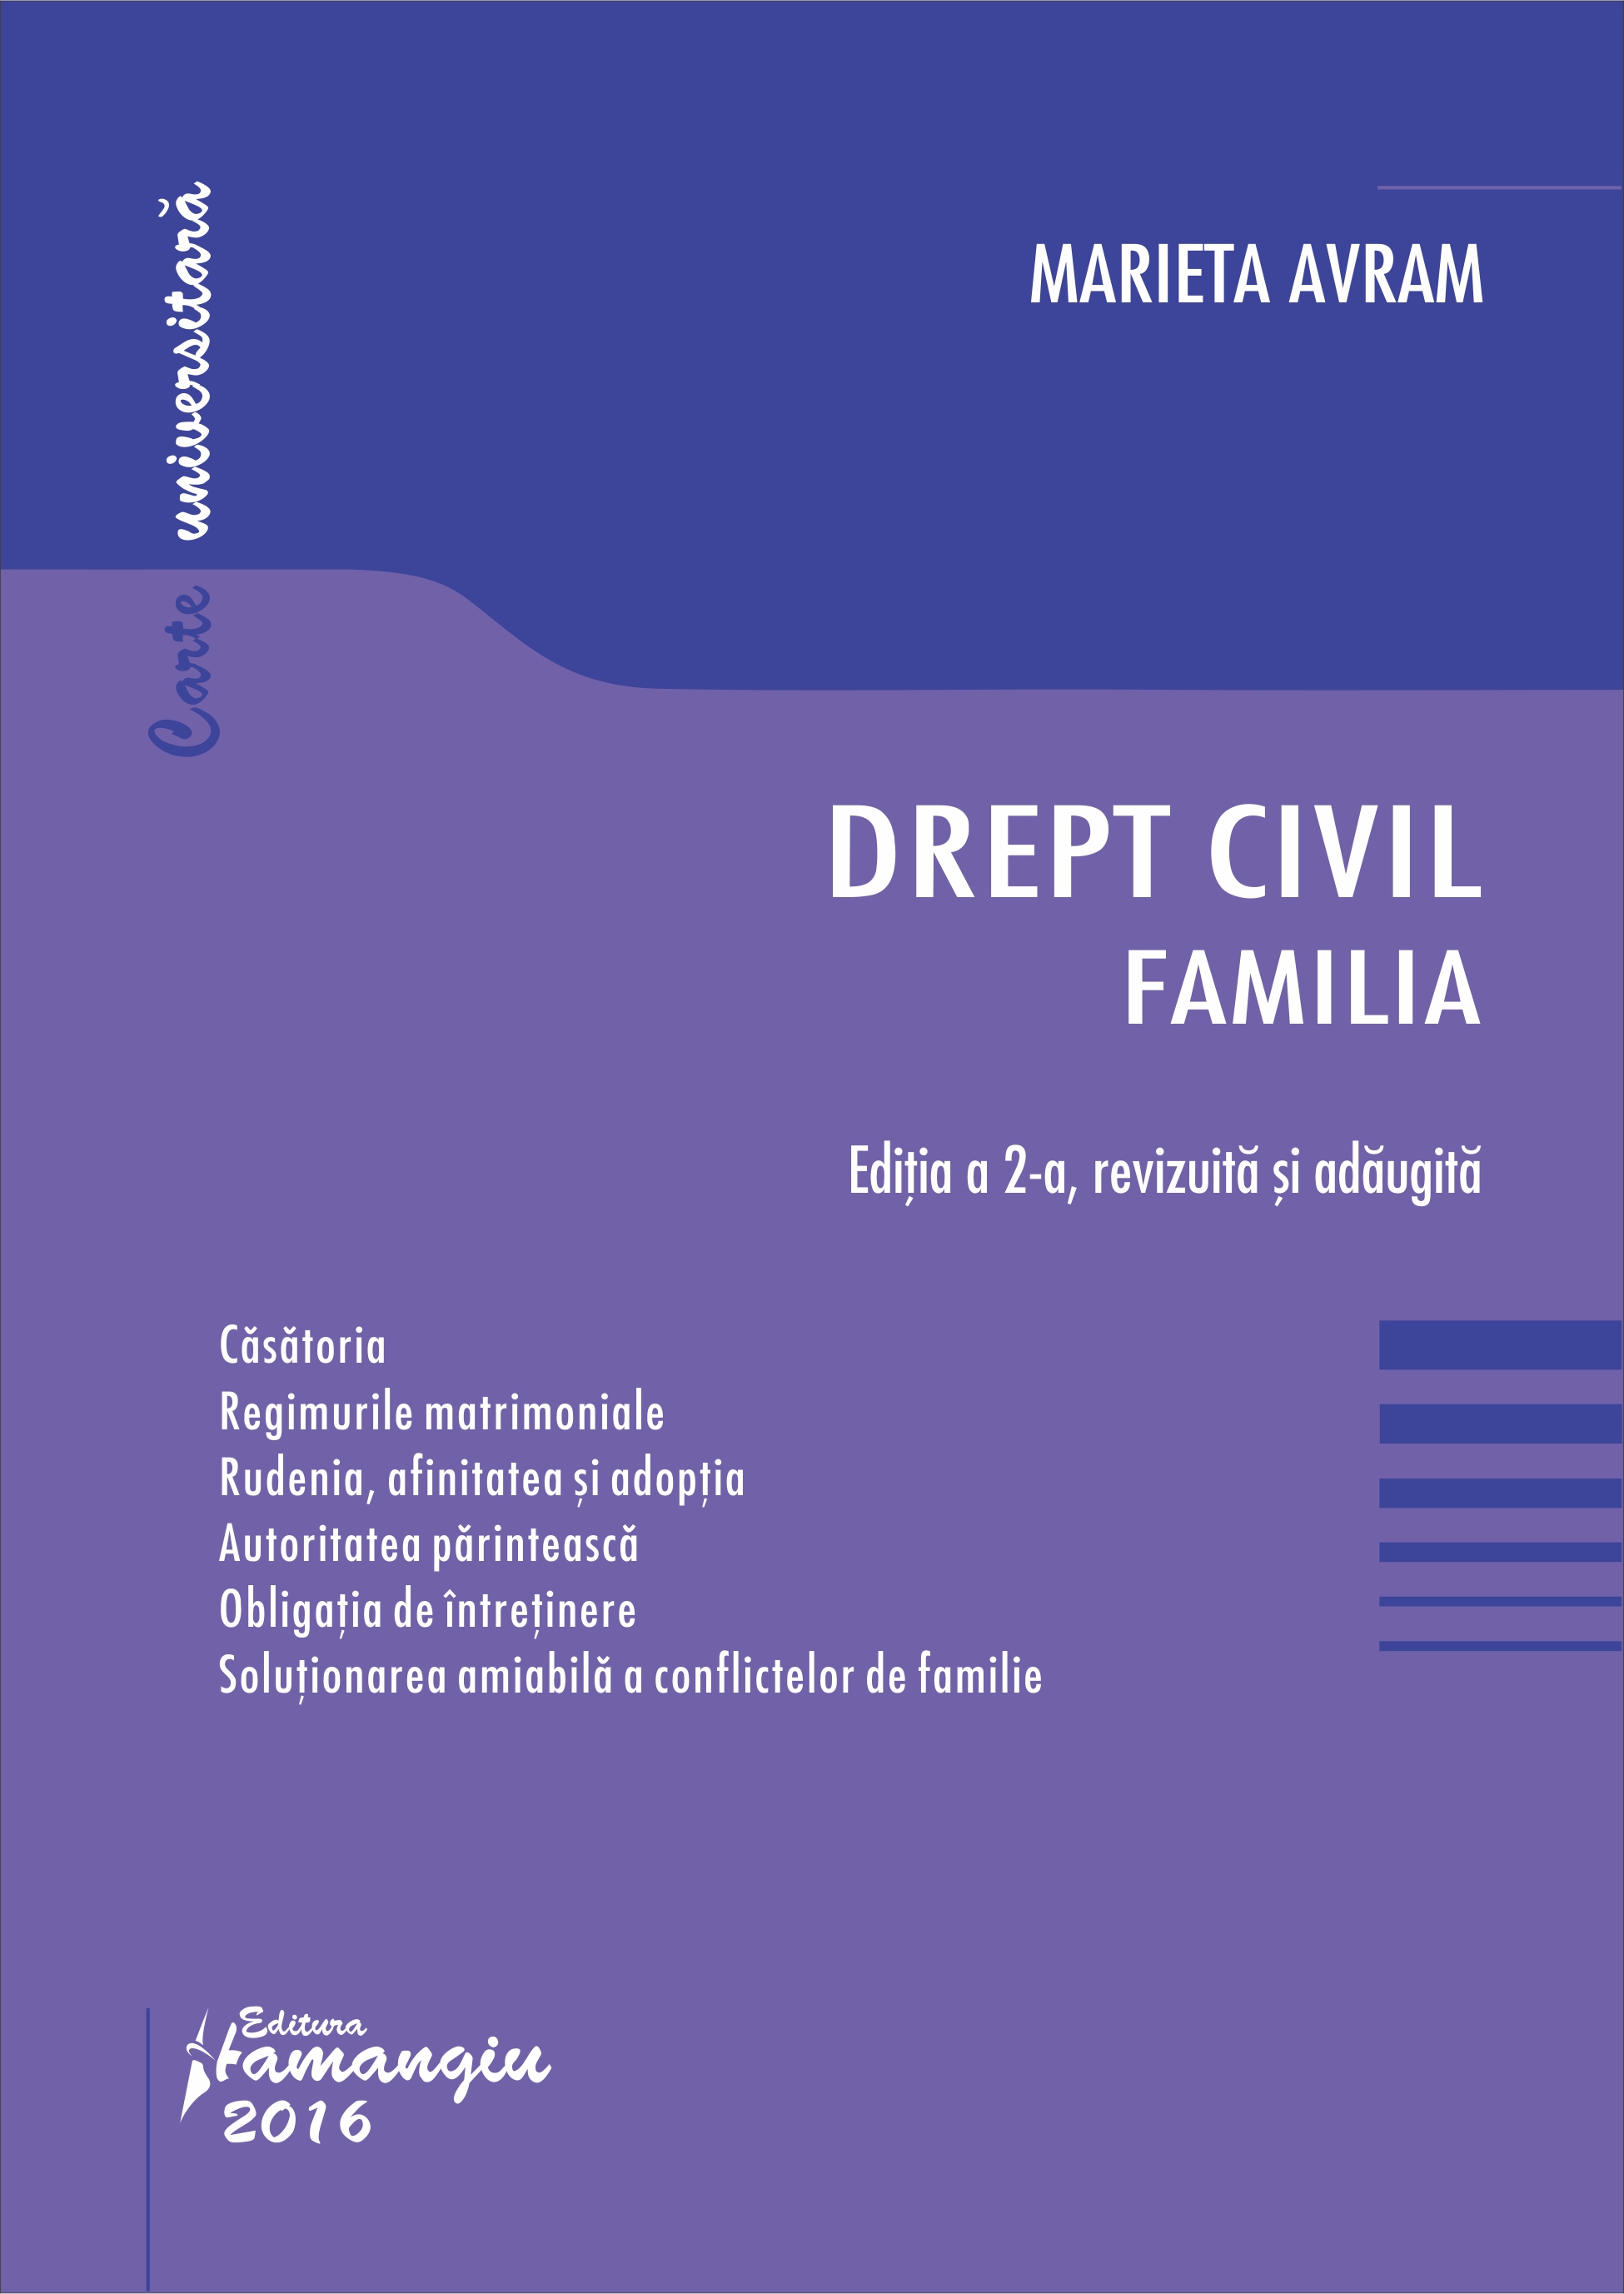 Drept civil. Familia ed.2 - Marieta Avram